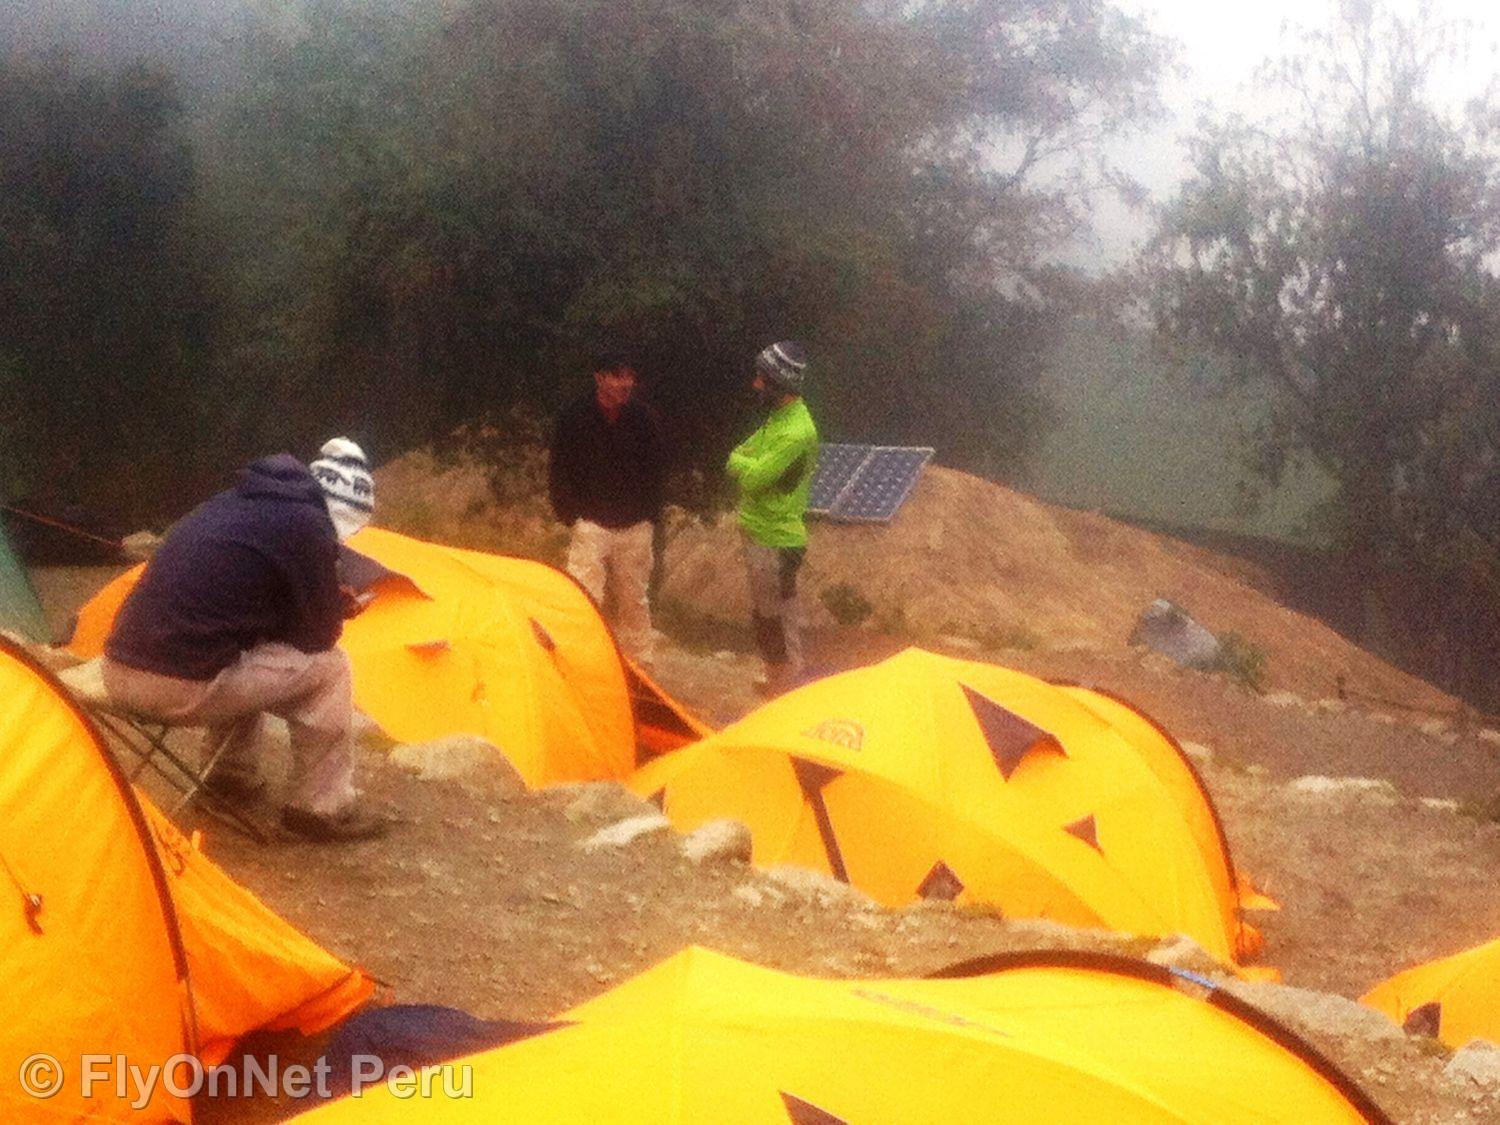 Álbum de fotos: Camping site, Inca Trail